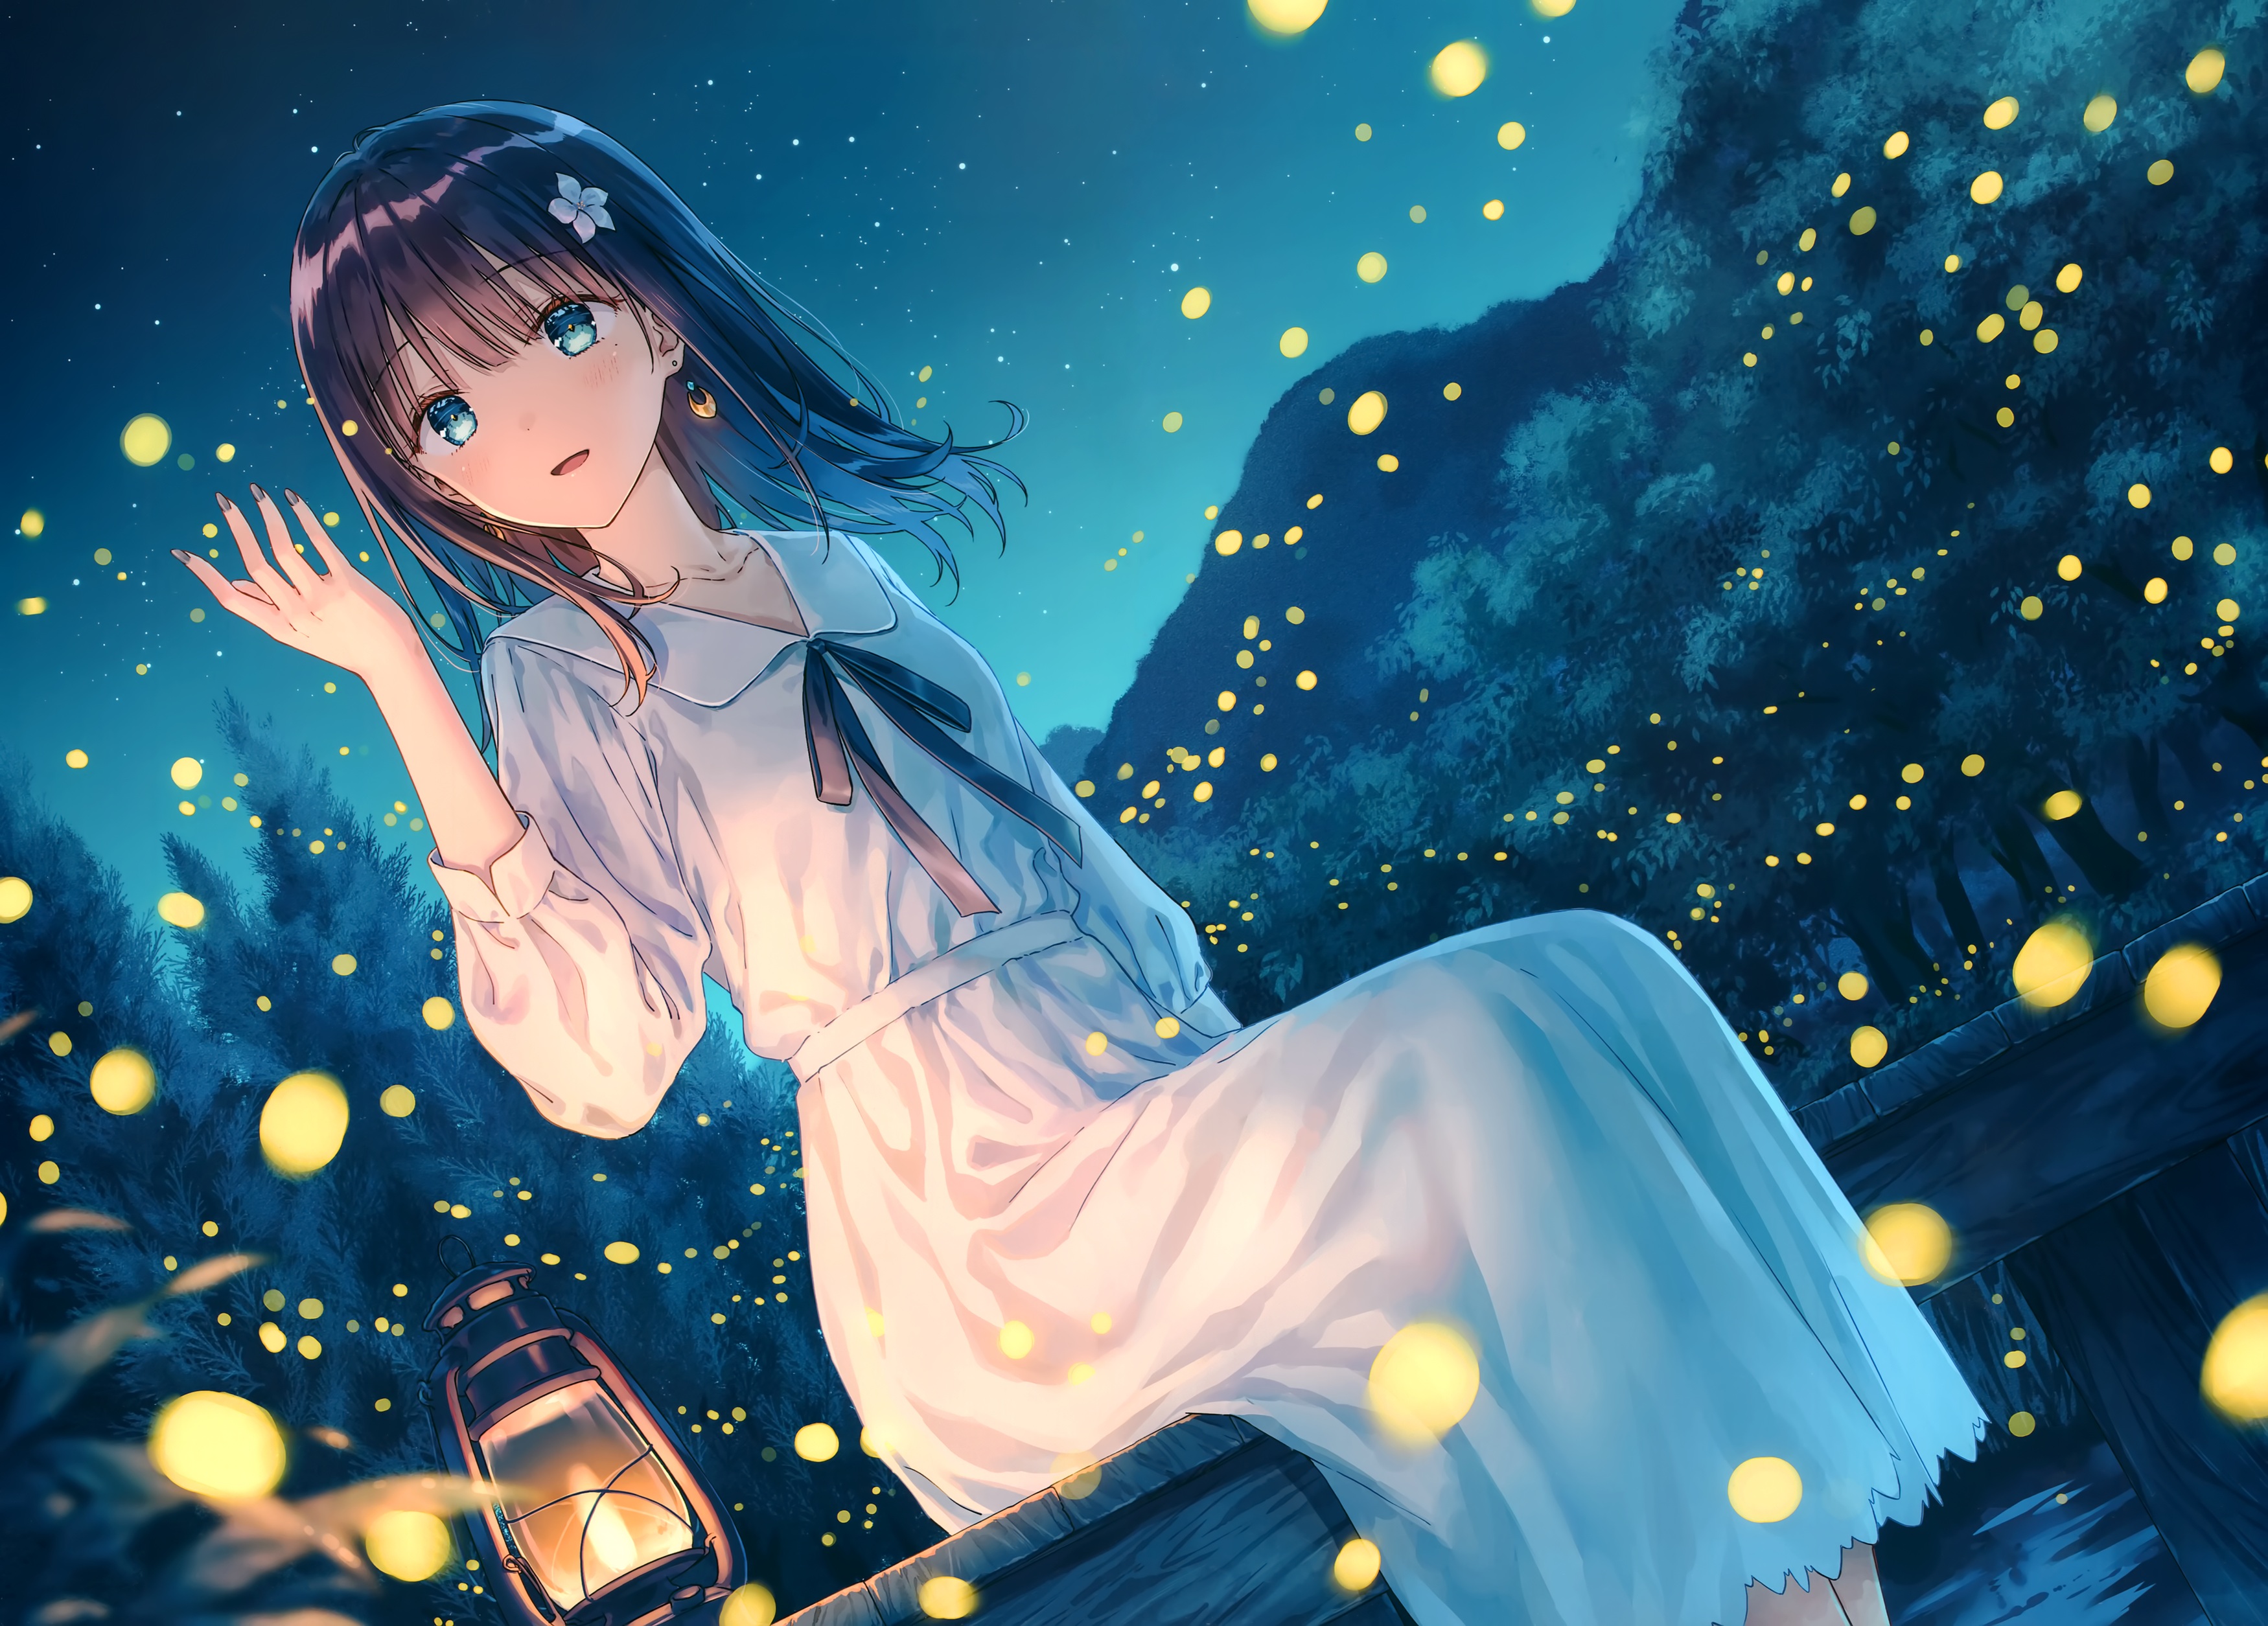 Enchanting Anime Forest Celestial Fireflies Illuminate Mystical Realm |  MUSE AI